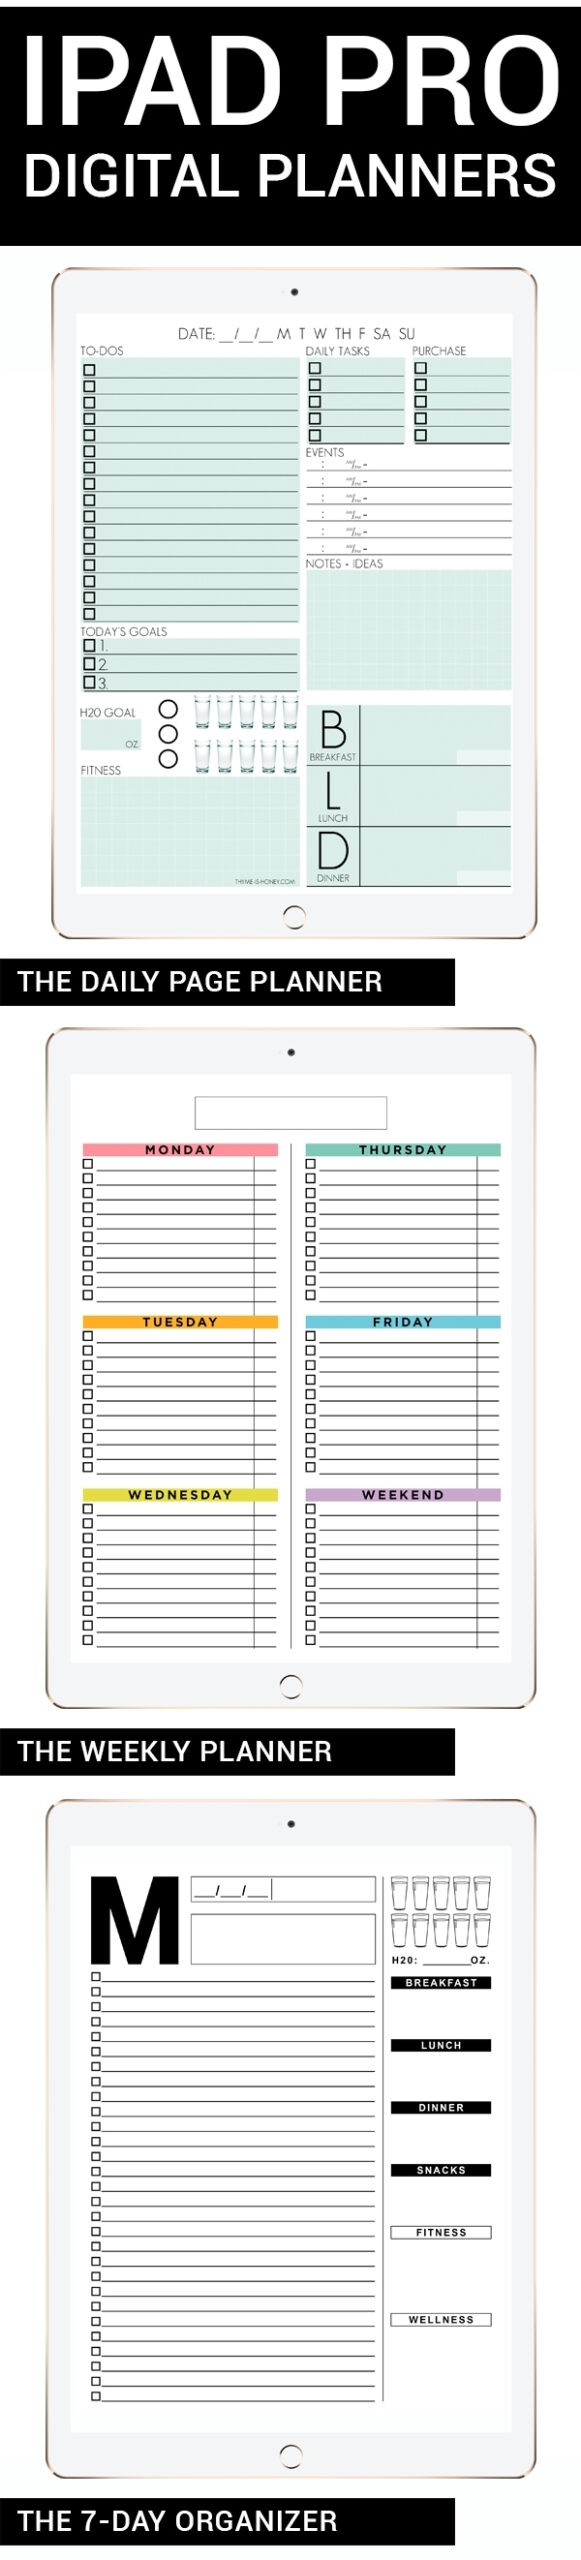 Print Calendar Ipad Pro | Ten Free Printable Calendar 2020